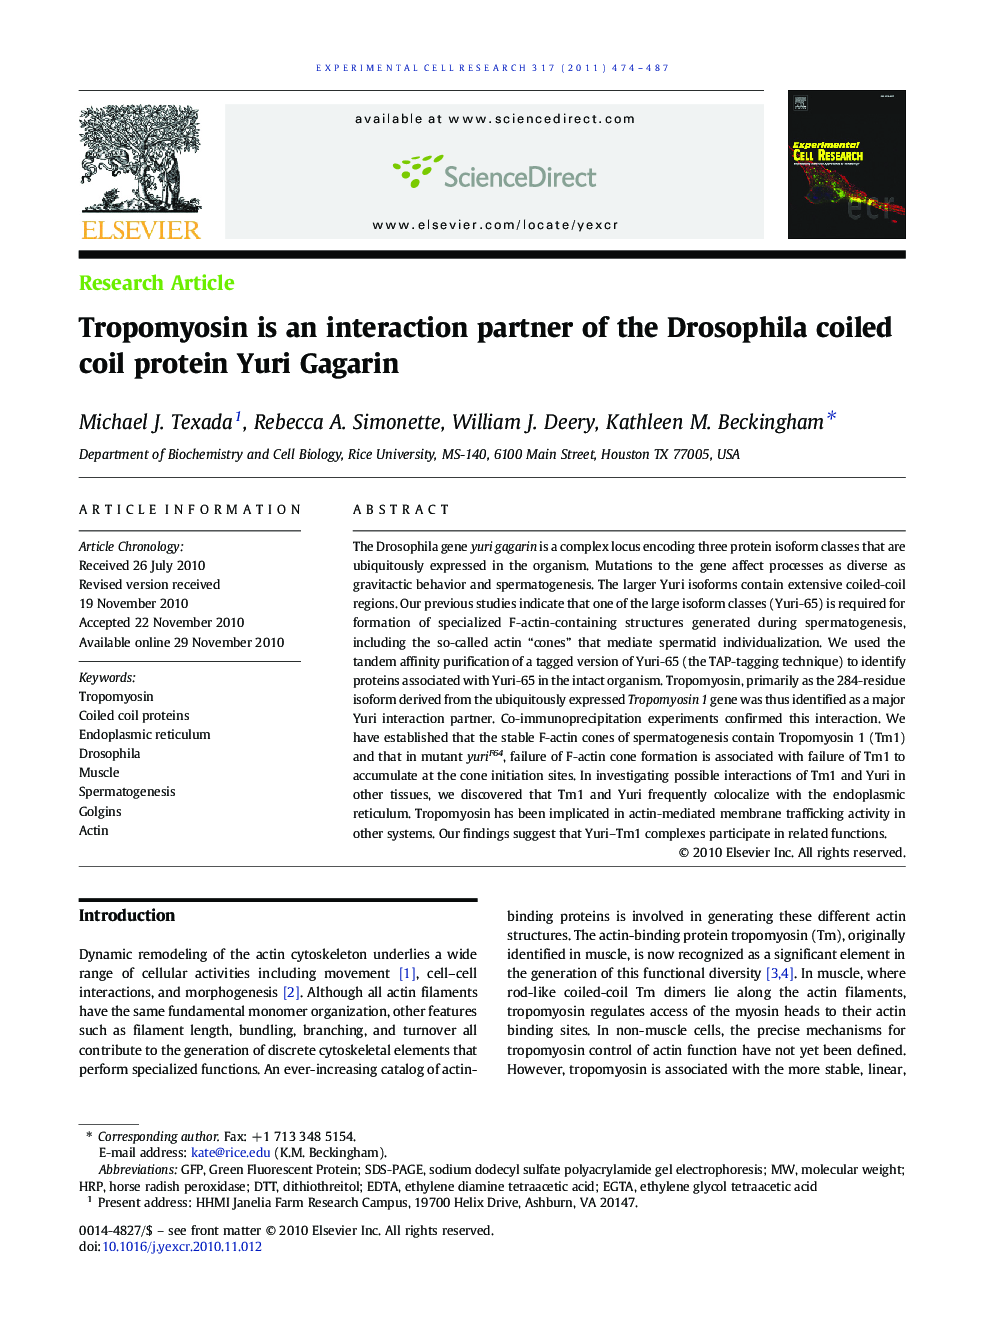 Tropomyosin is an interaction partner of the Drosophila coiled coil protein Yuri Gagarin